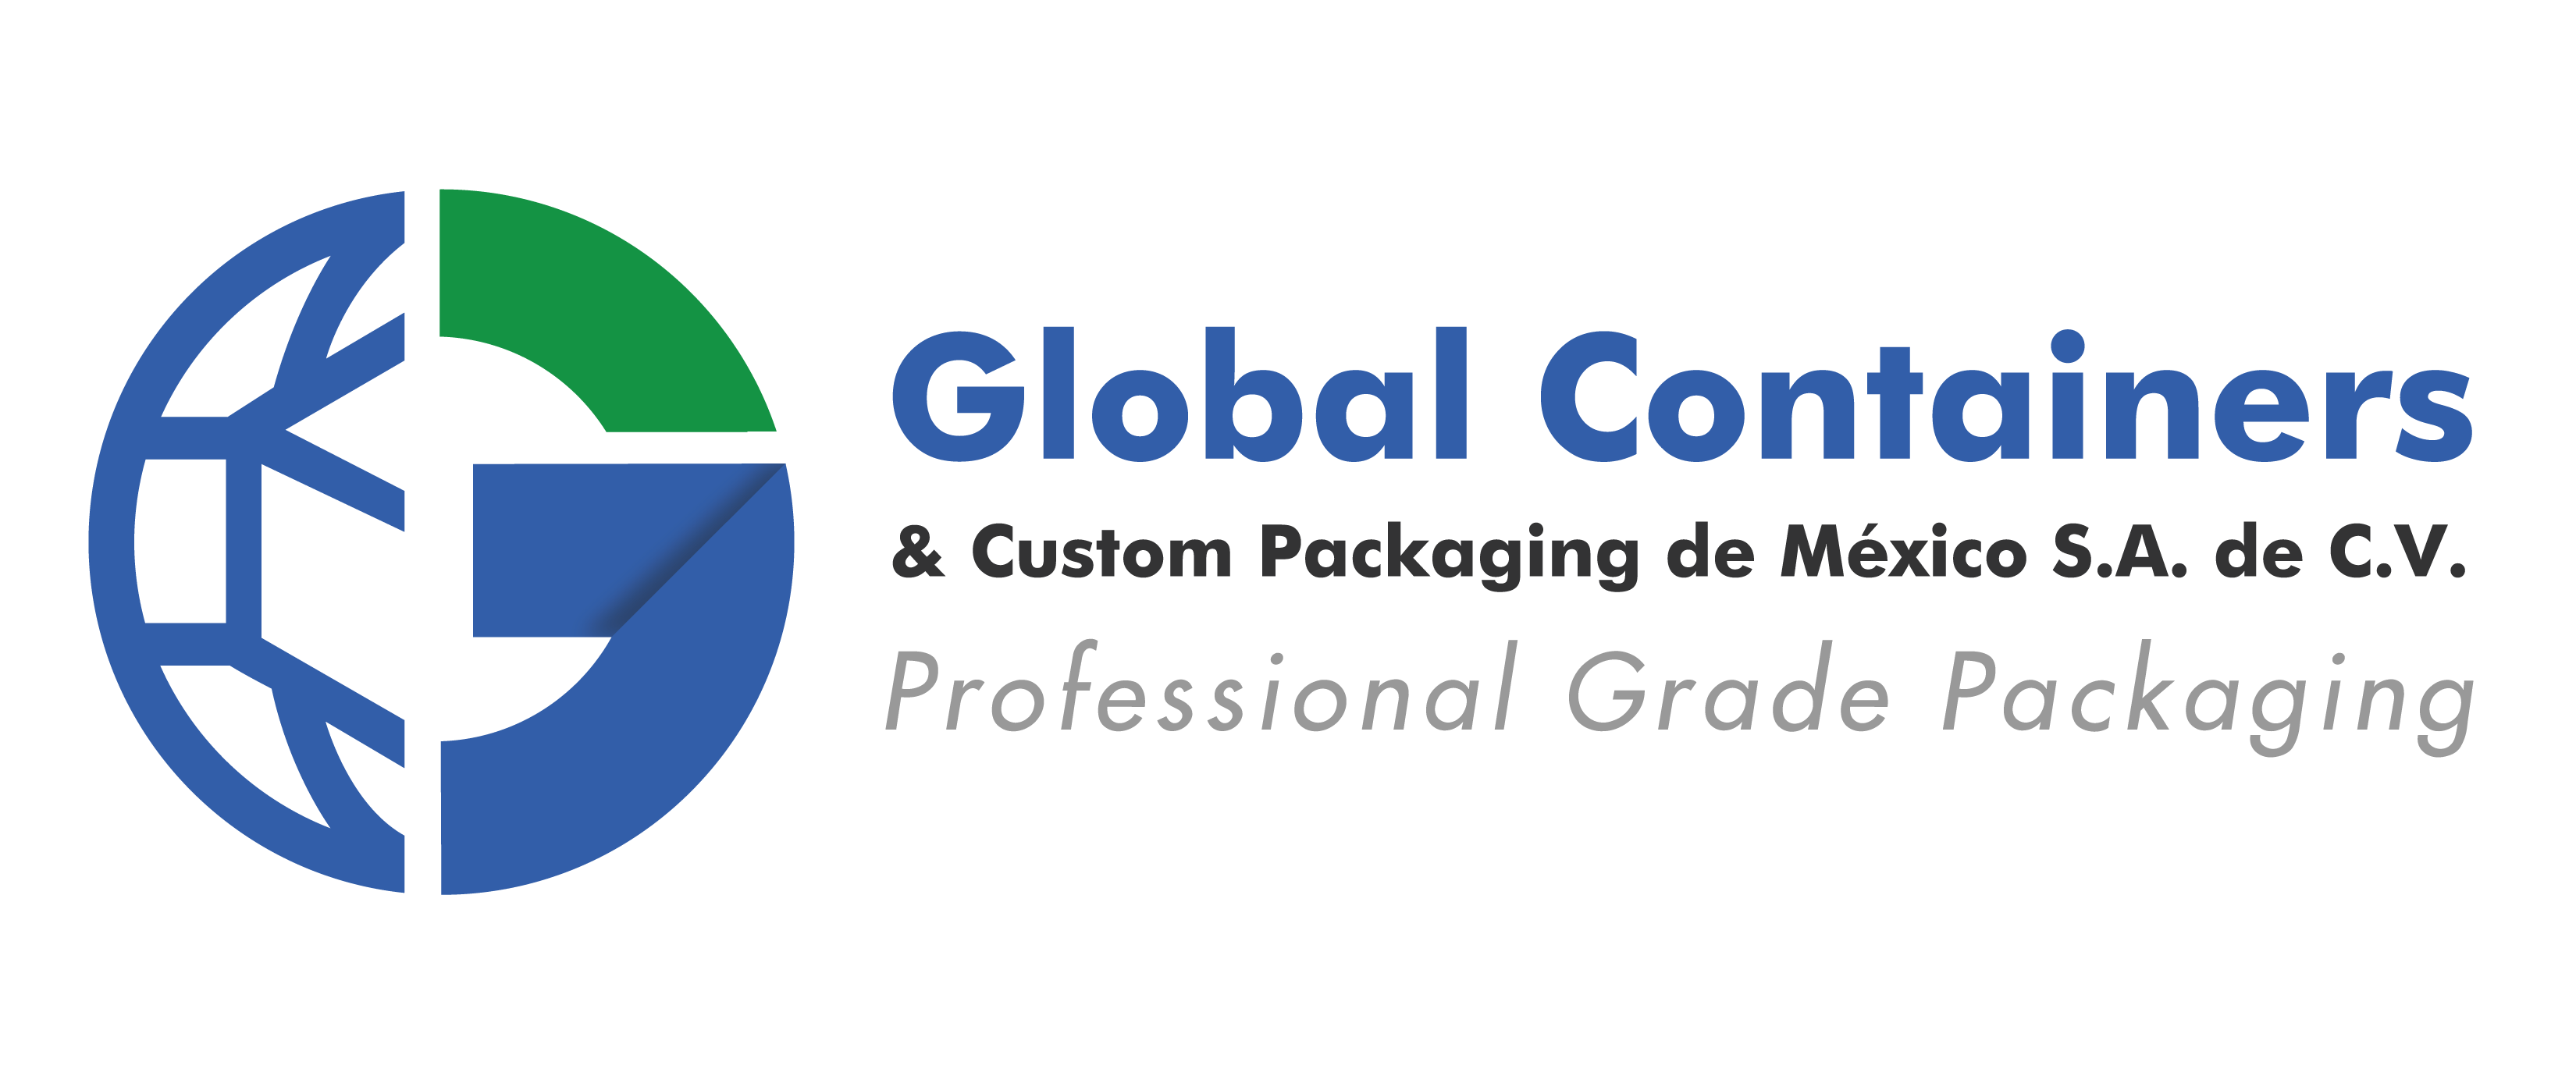 Global Containers & Custom Packaging de México